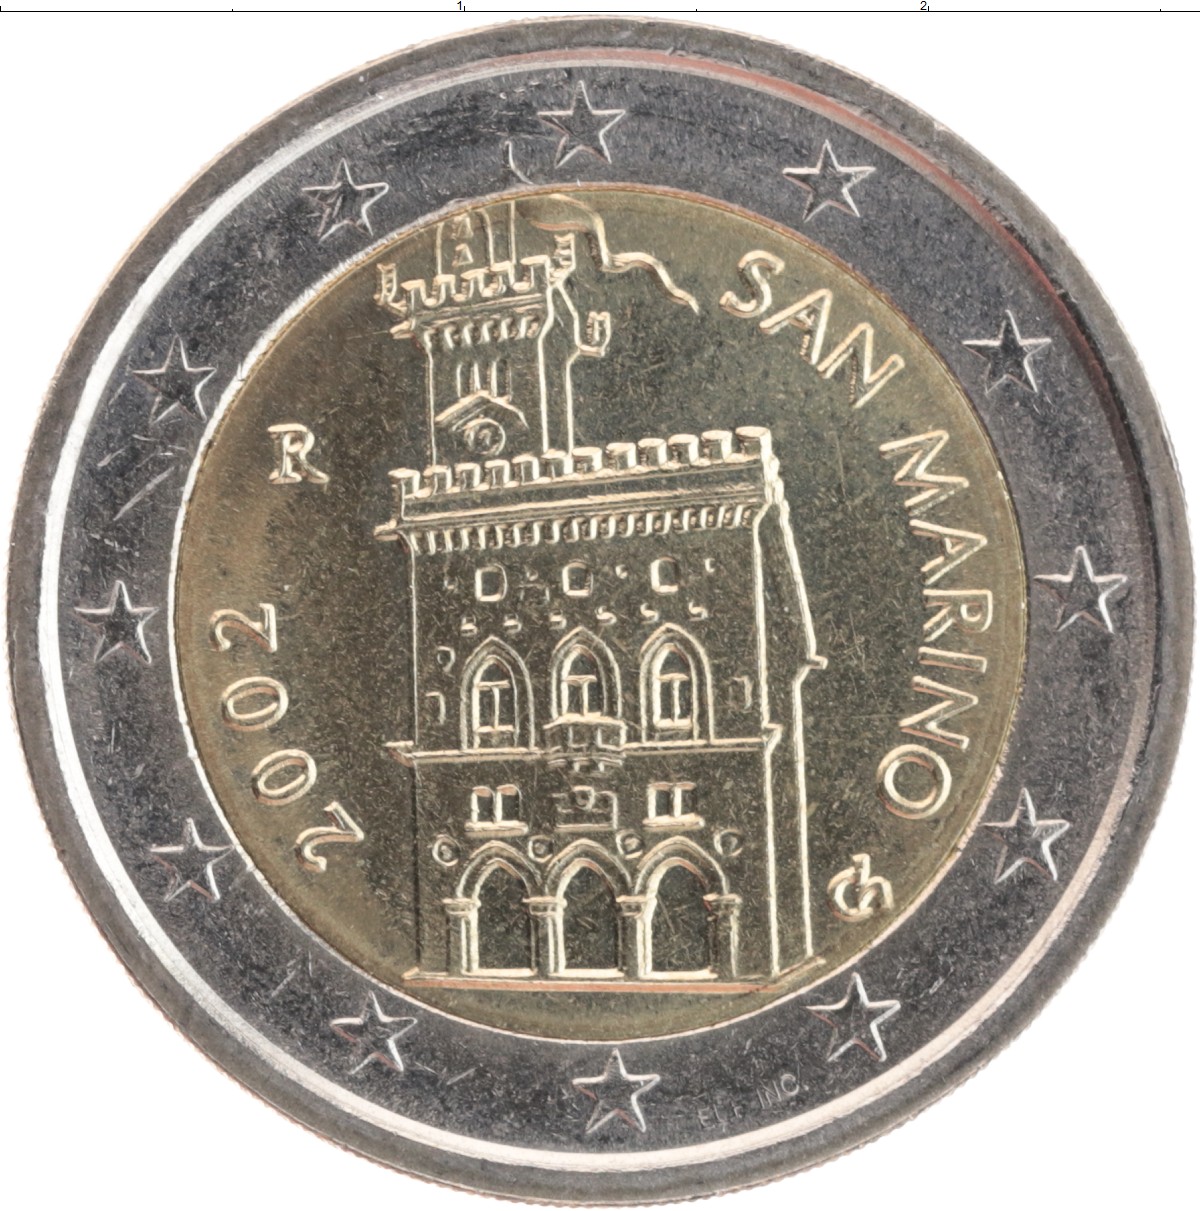 Сан марино 2. Монеты евро Сан-Марино. 2 Евро Сан Марино. Монета 2 евро Сан Марино 2007. 2 Евро Сан Марино 2002.